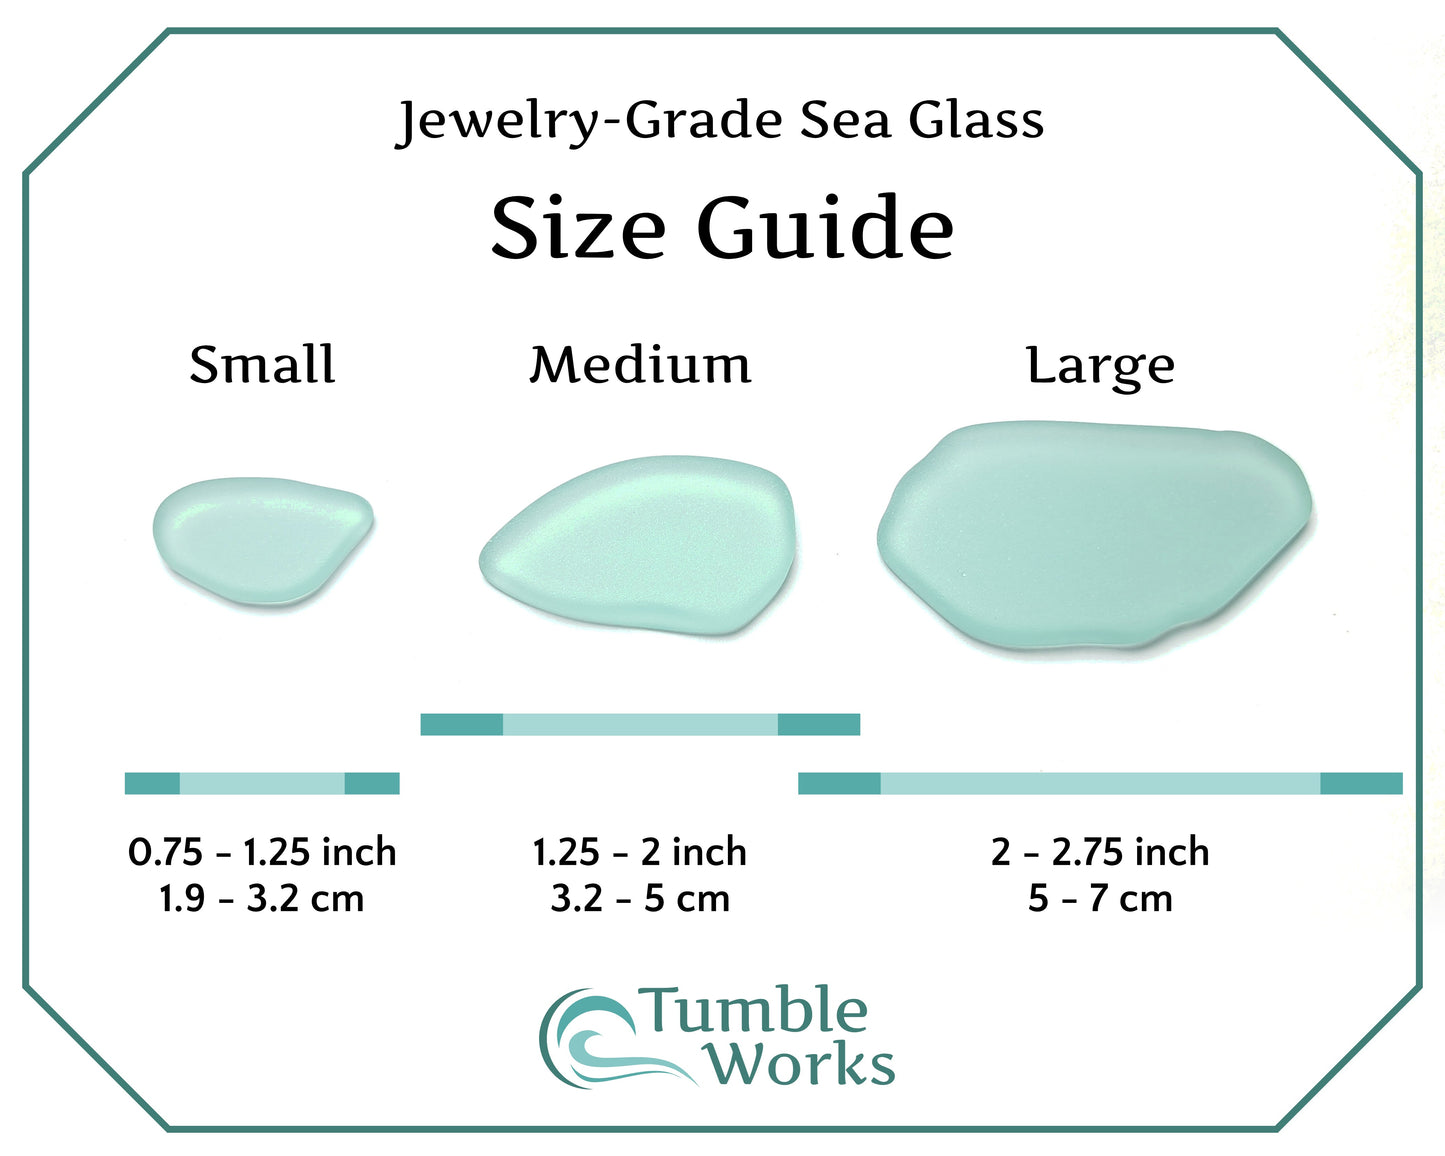 Flat Sea Glass - MEDIUM 1.25 - 2 inch - Jewelry & Crafting Supplies